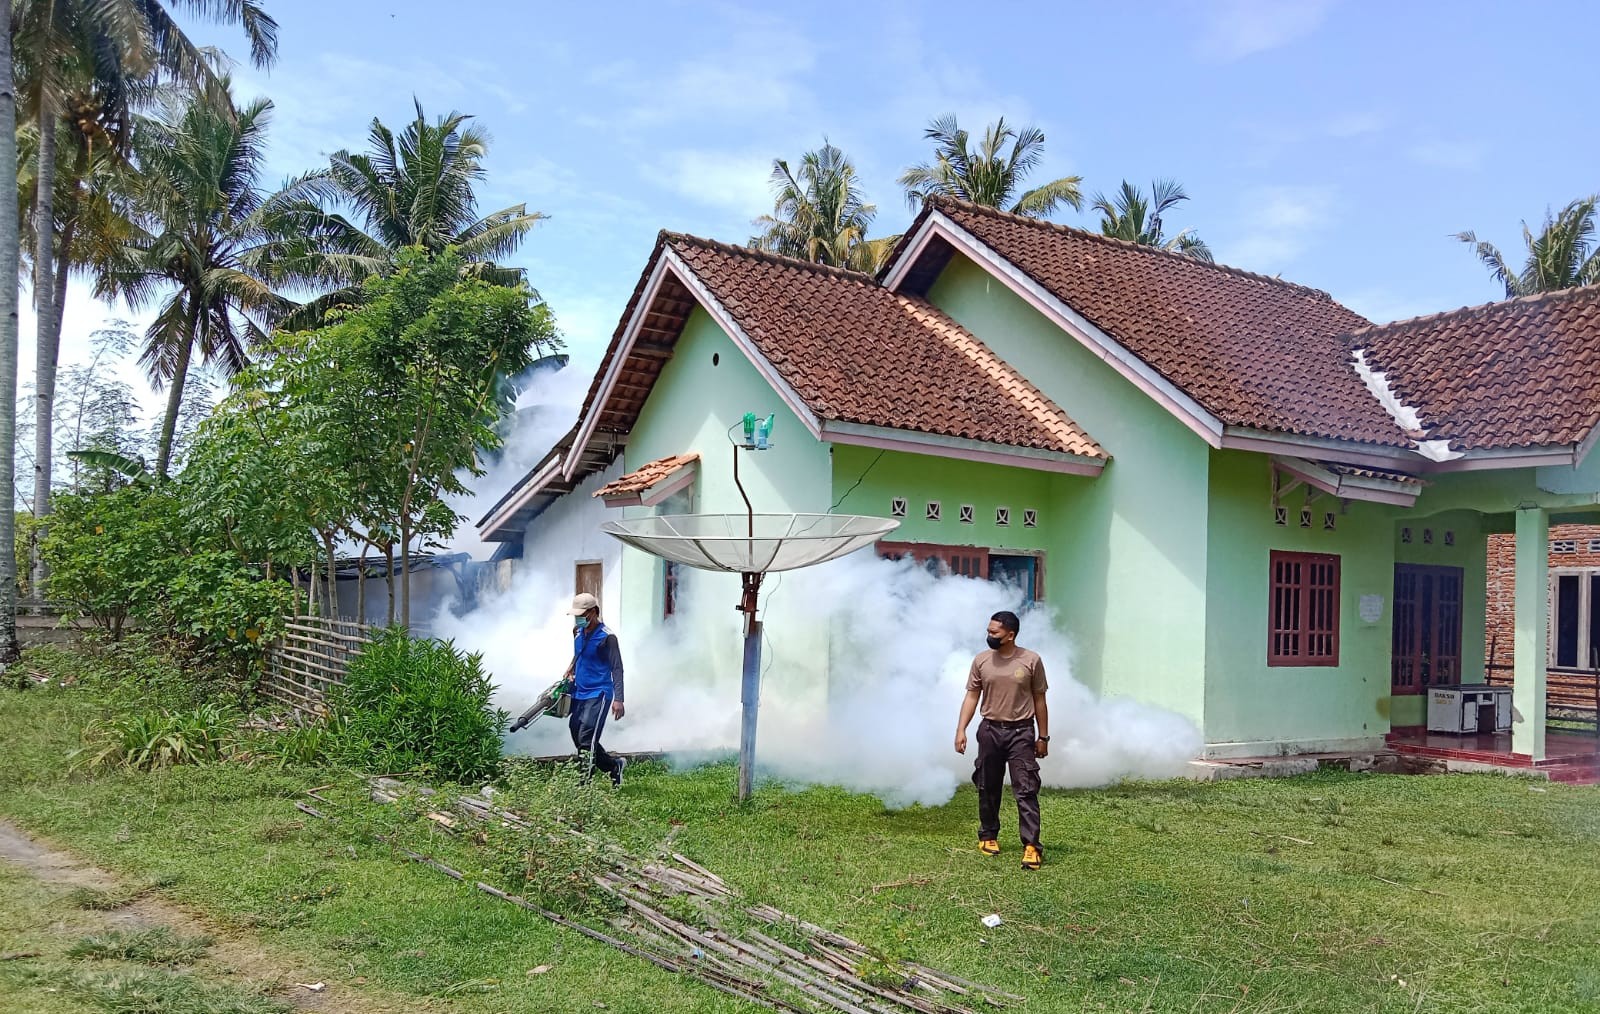 Pencegahan DBD, Pilar Desa Ajak Warga Gotong Royong Membersihkan Lingkungan